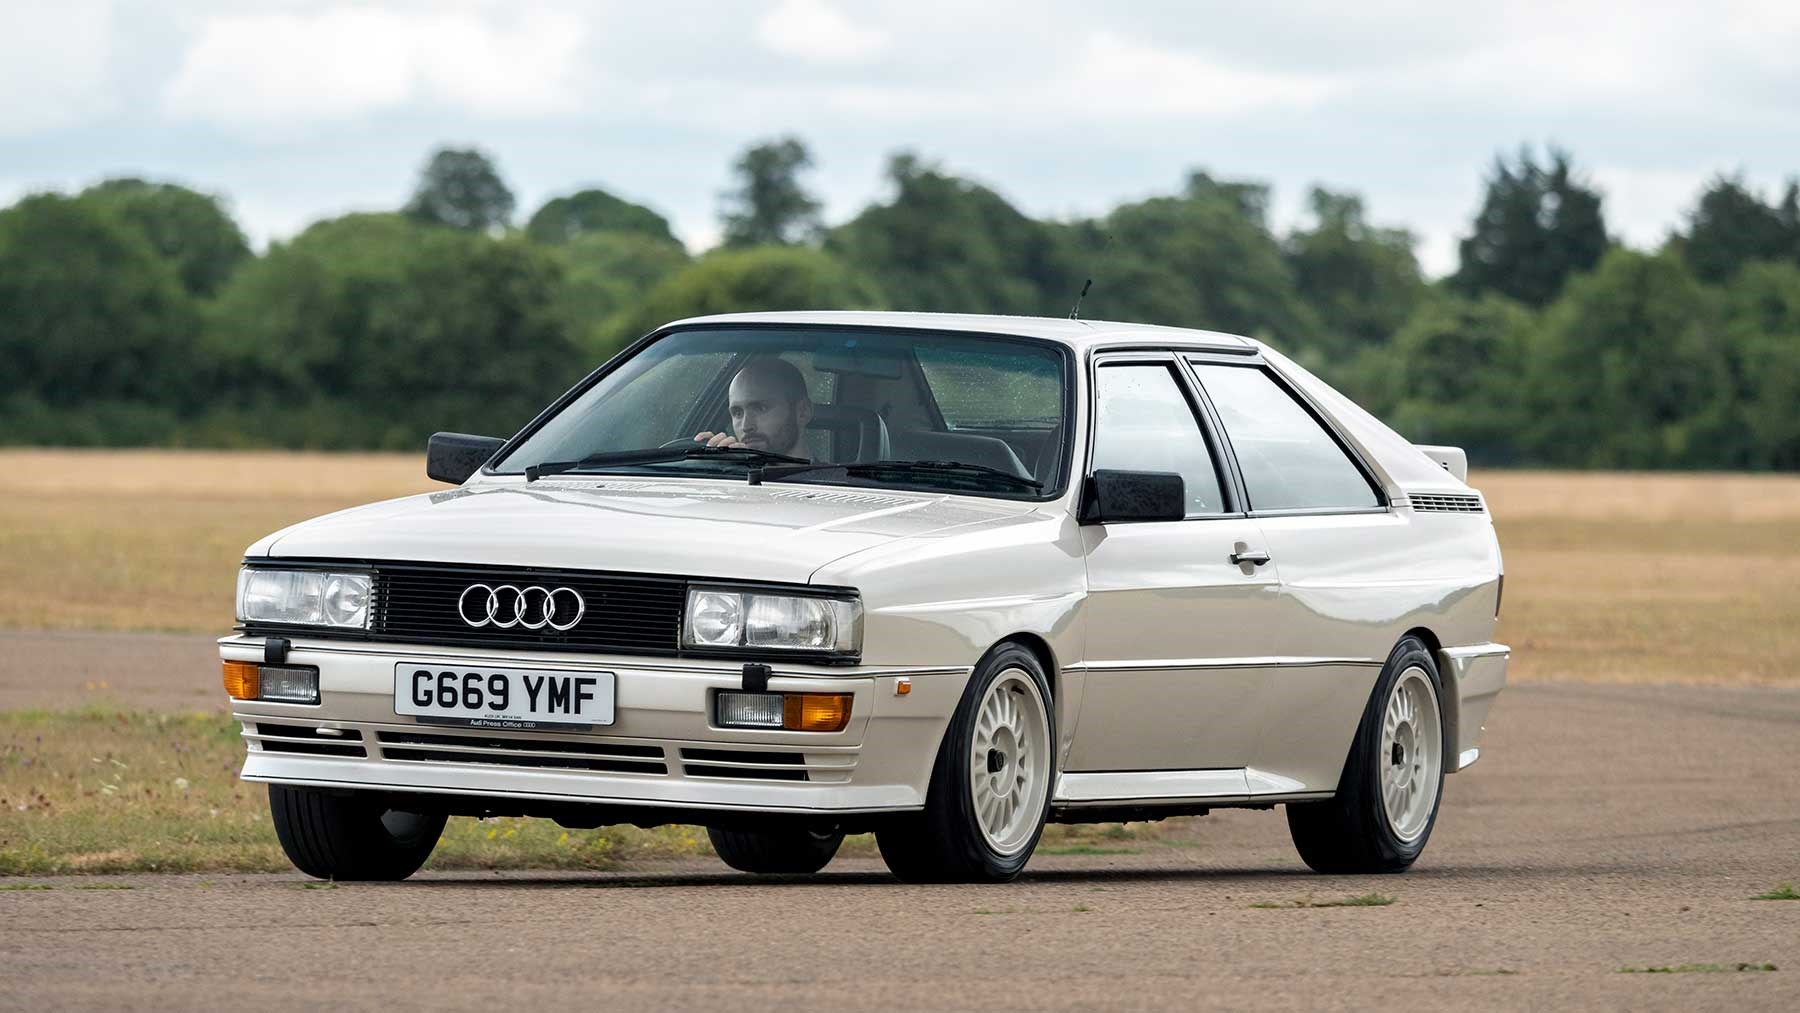 Driving the classics: Audi Quattro 20v review